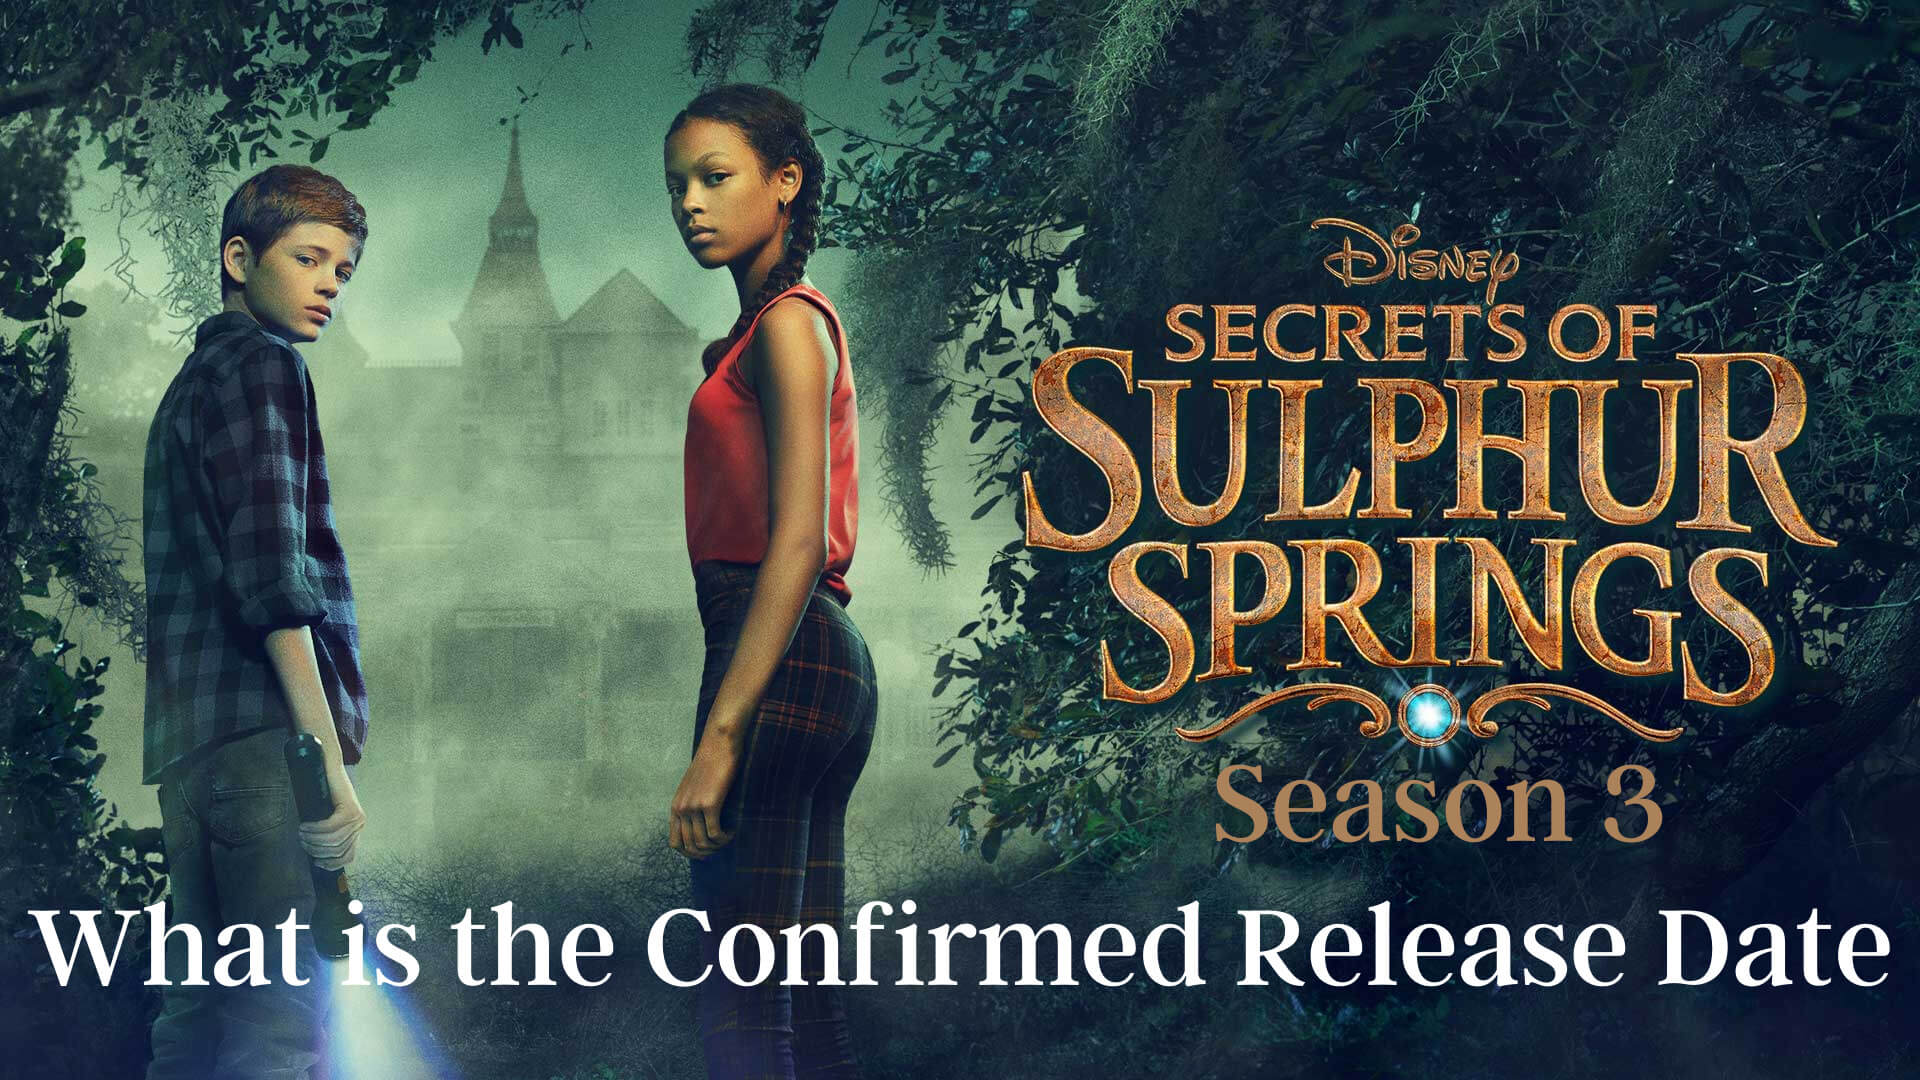 secrets of sulphur springs season 2 ending